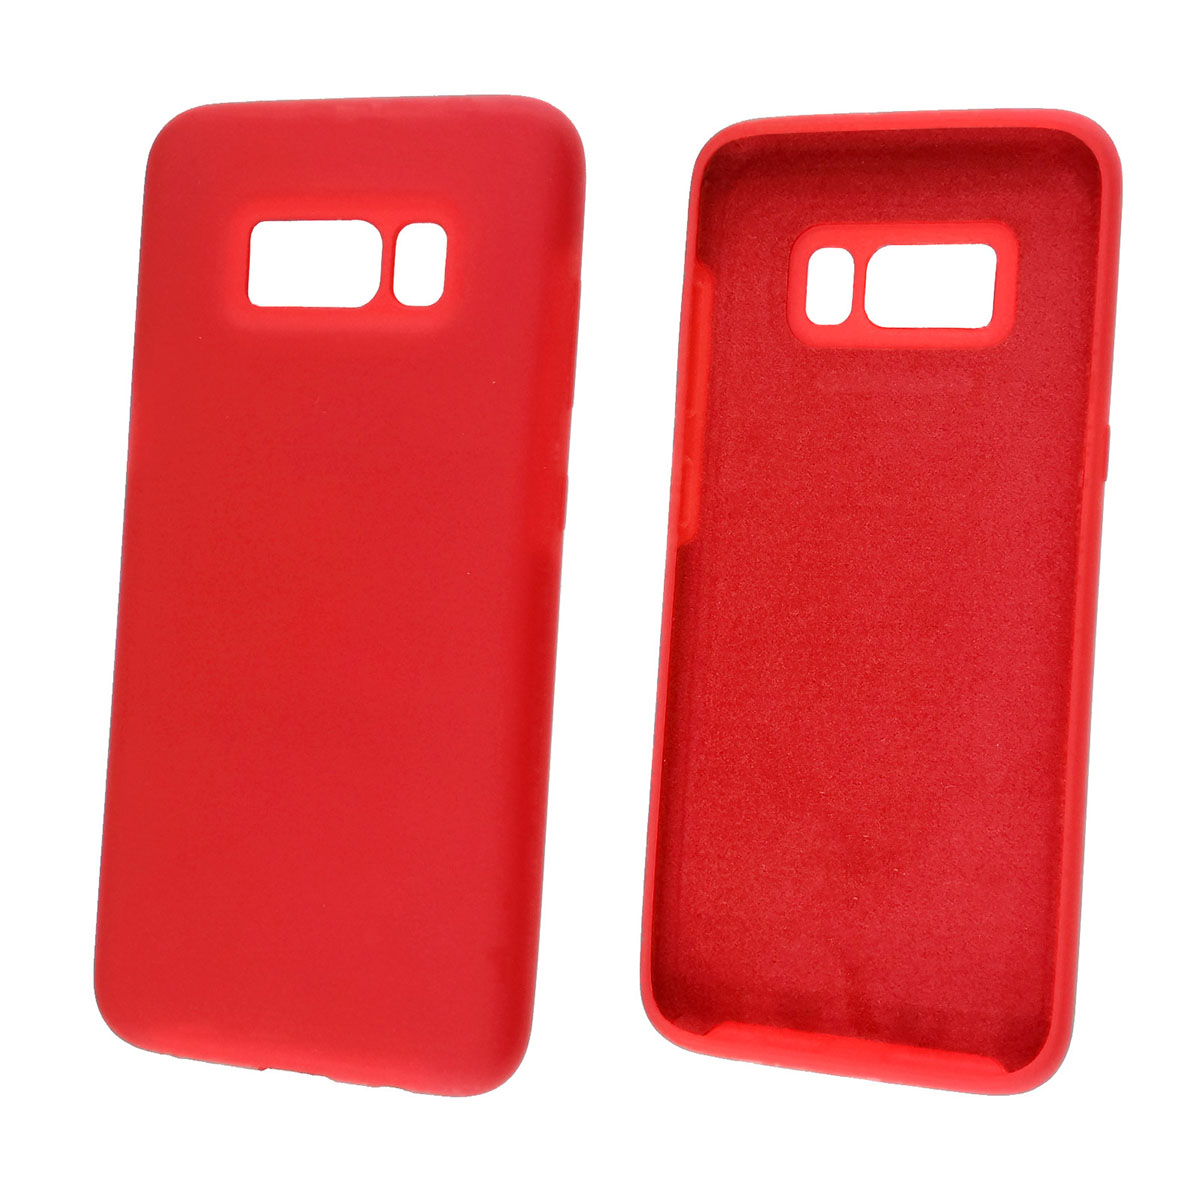 Чехол накладка Silicon Cover для SAMSUNG Galaxy S8 (SM-G950), силикон, бархат, цвет красный.